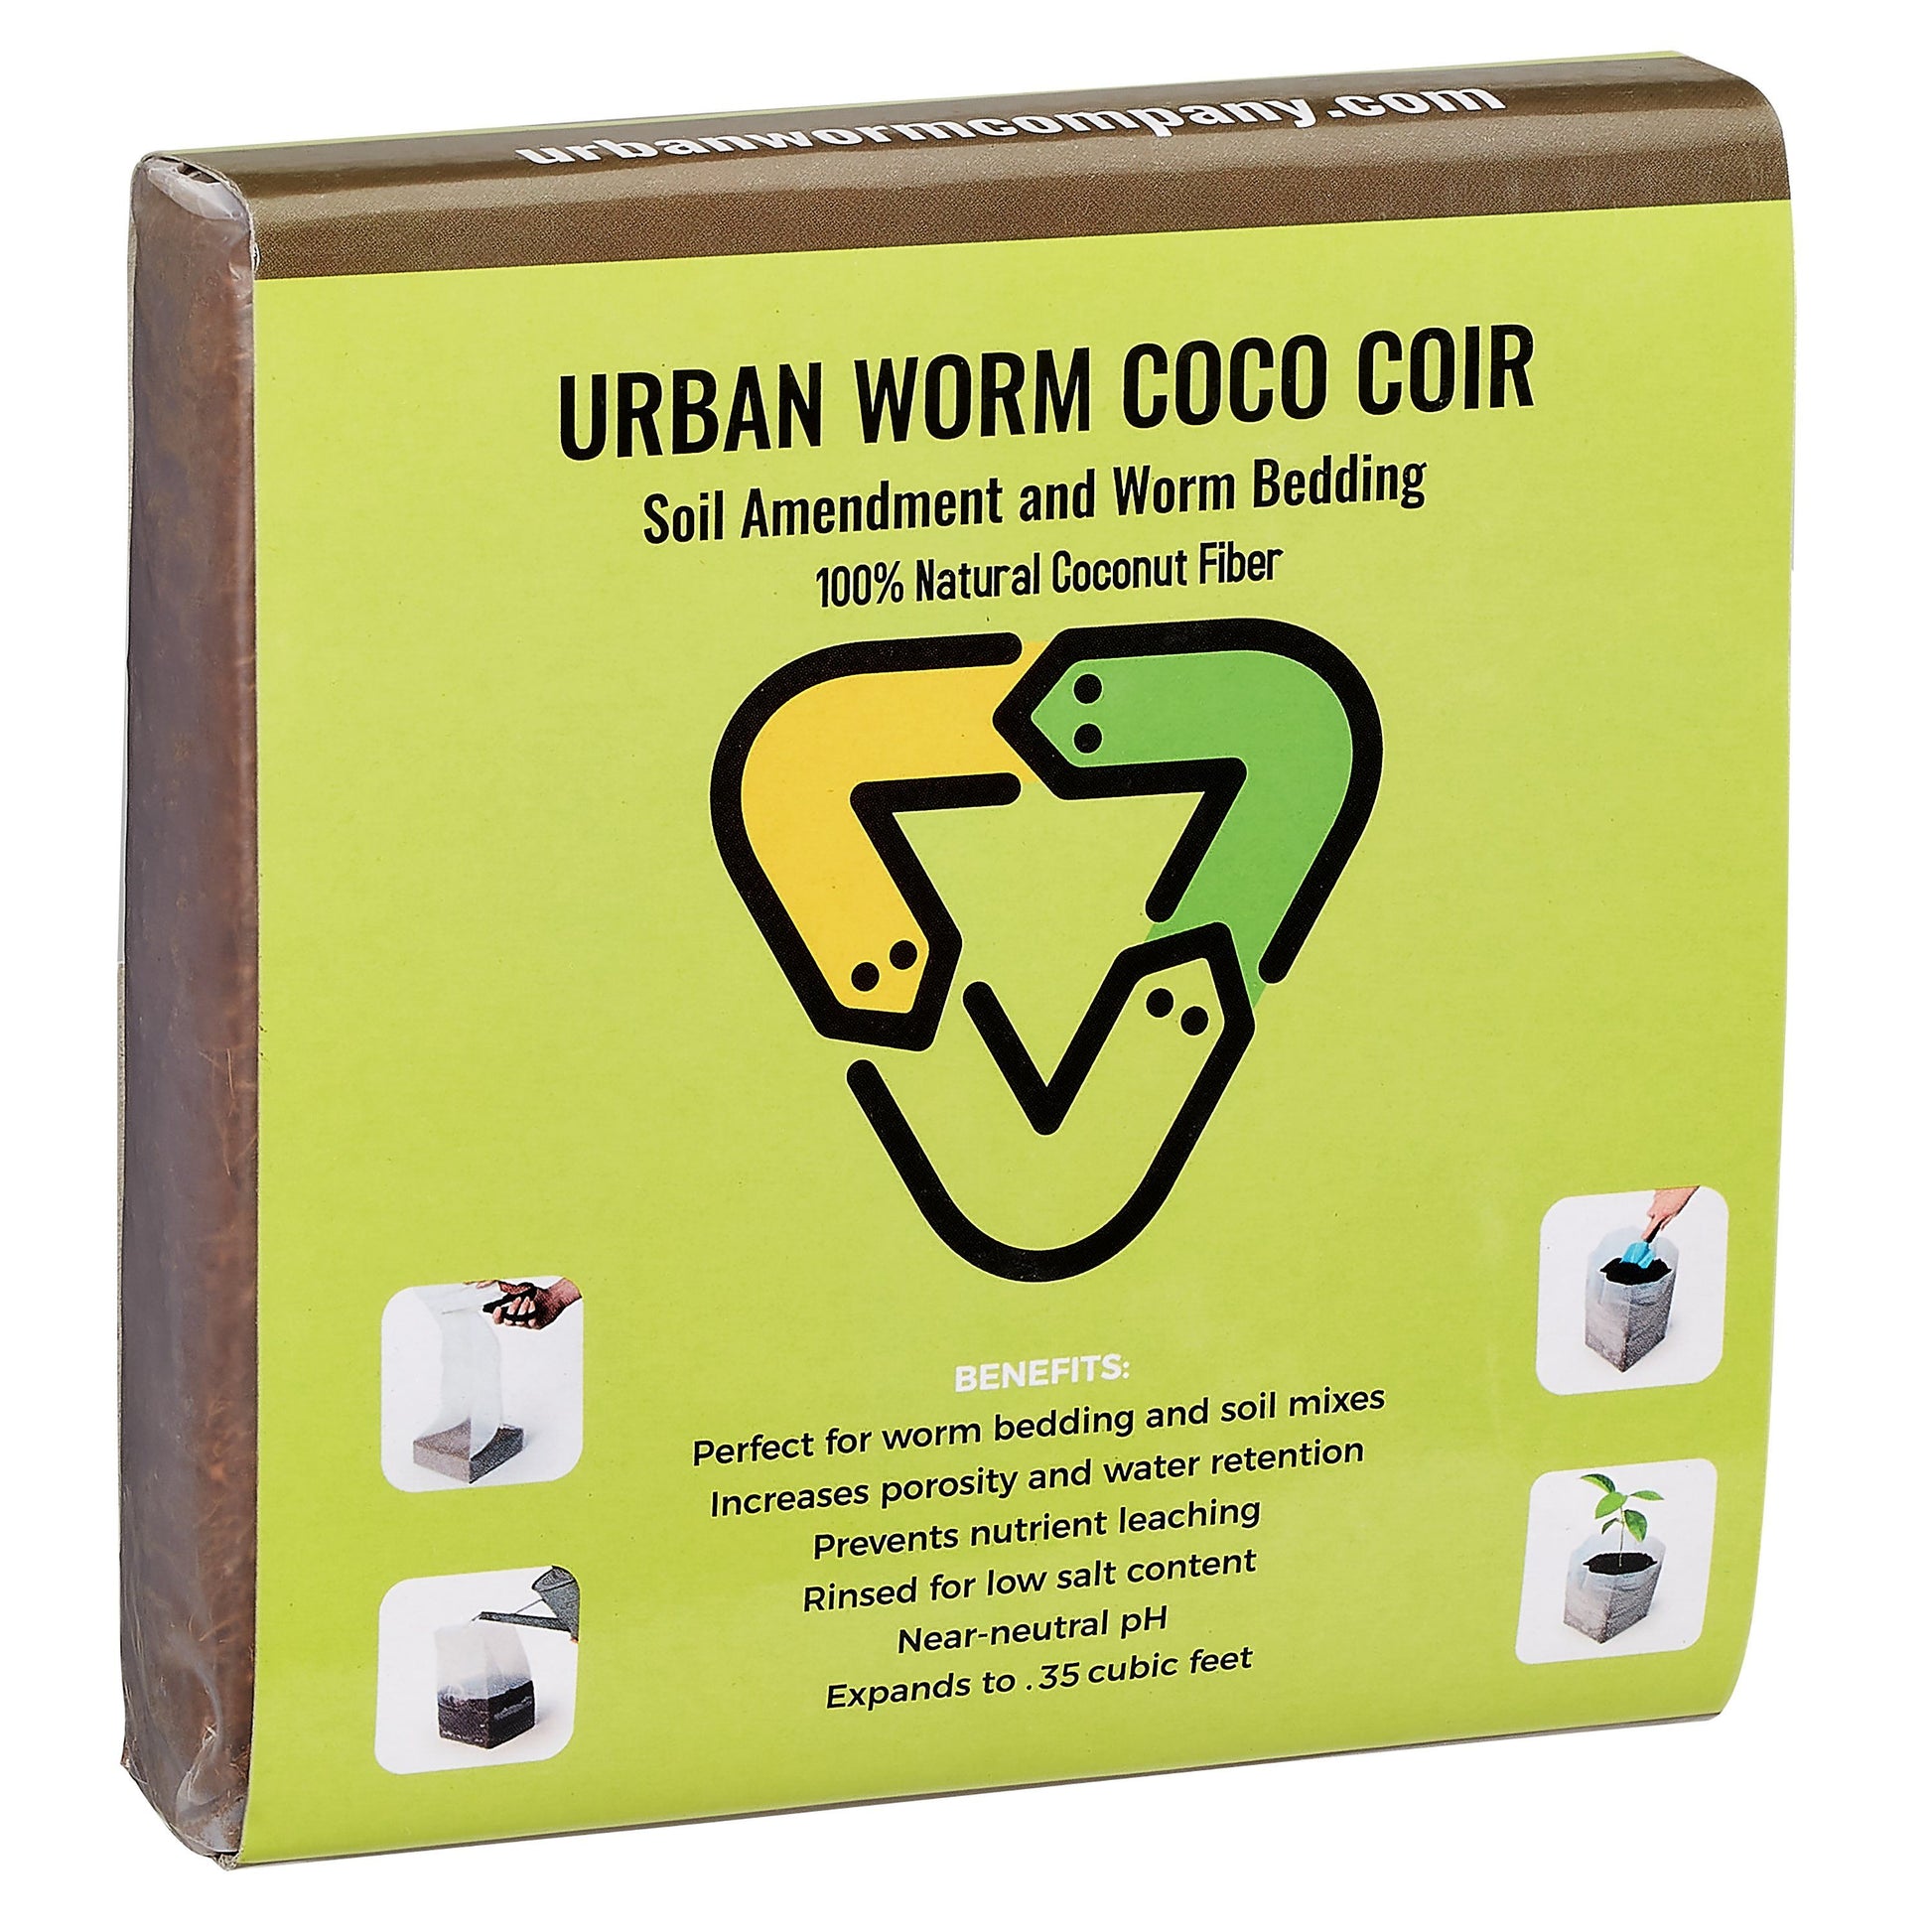 Urban Worm Coco Coir – Epic Gardening